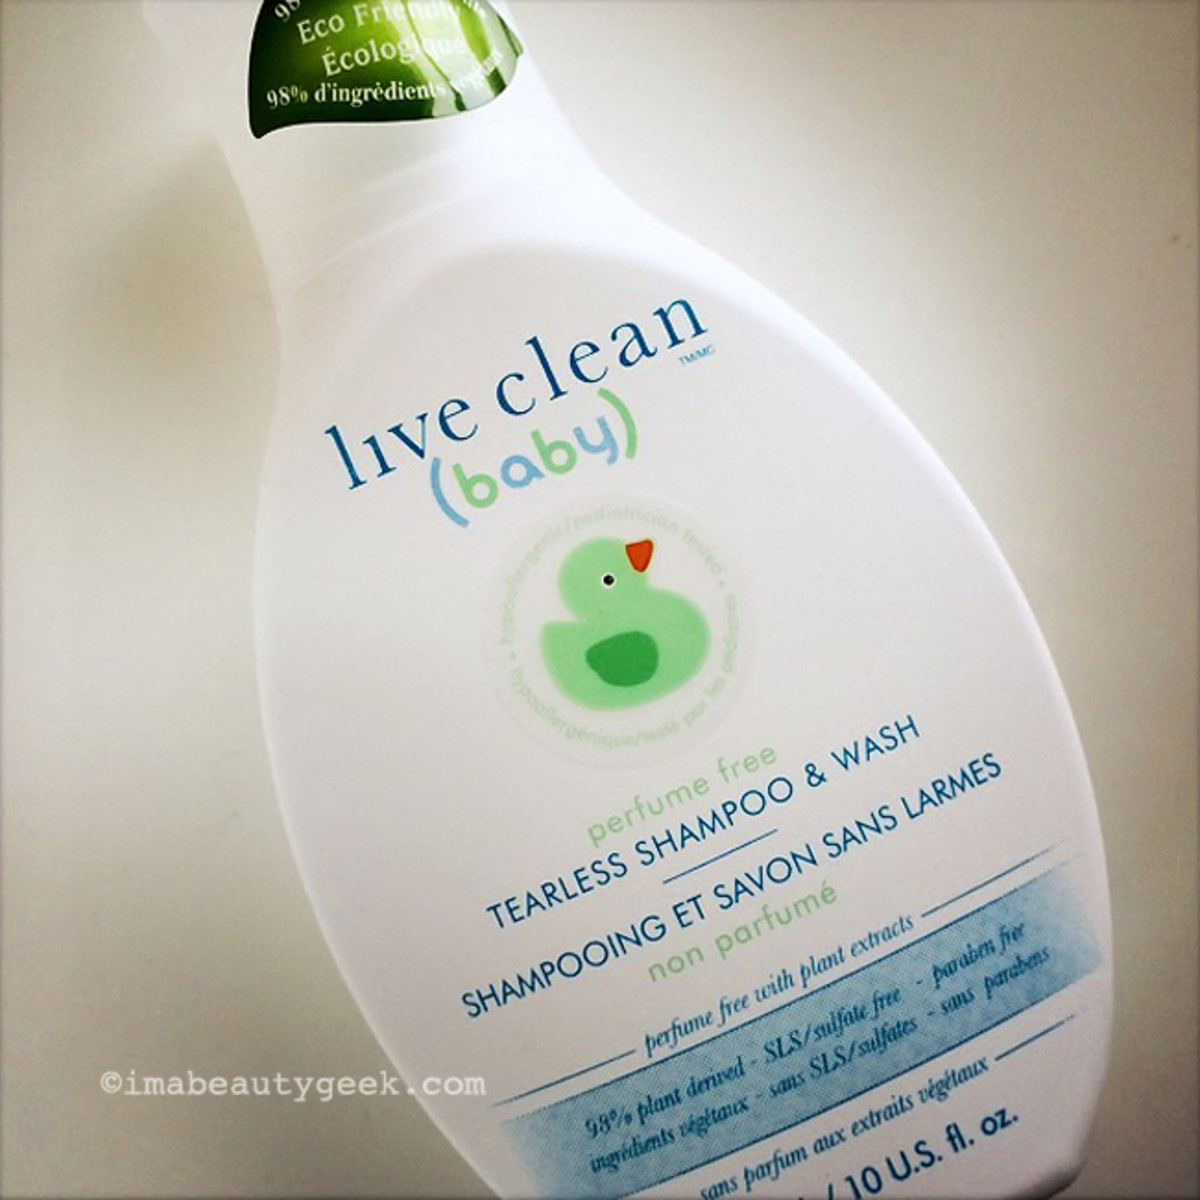 Live Clean Baby Perfume Free Tearless Shampoo & Wash